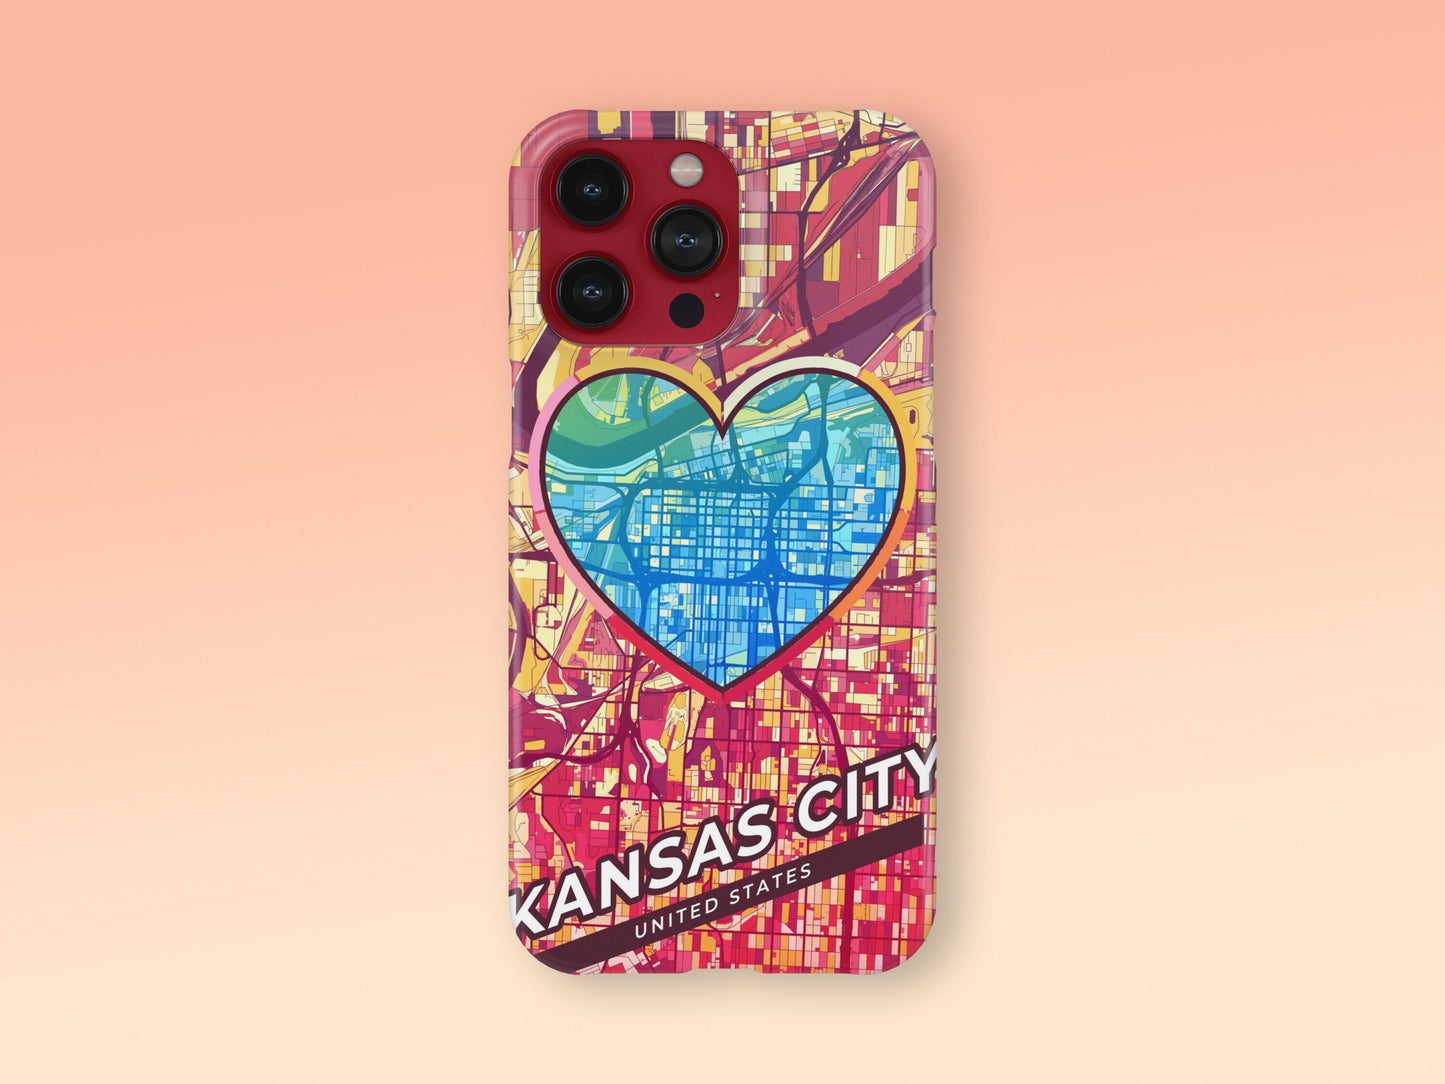 Kansas City Missouri slim phone case with colorful icon. Birthday, wedding or housewarming gift. Couple match cases. 2